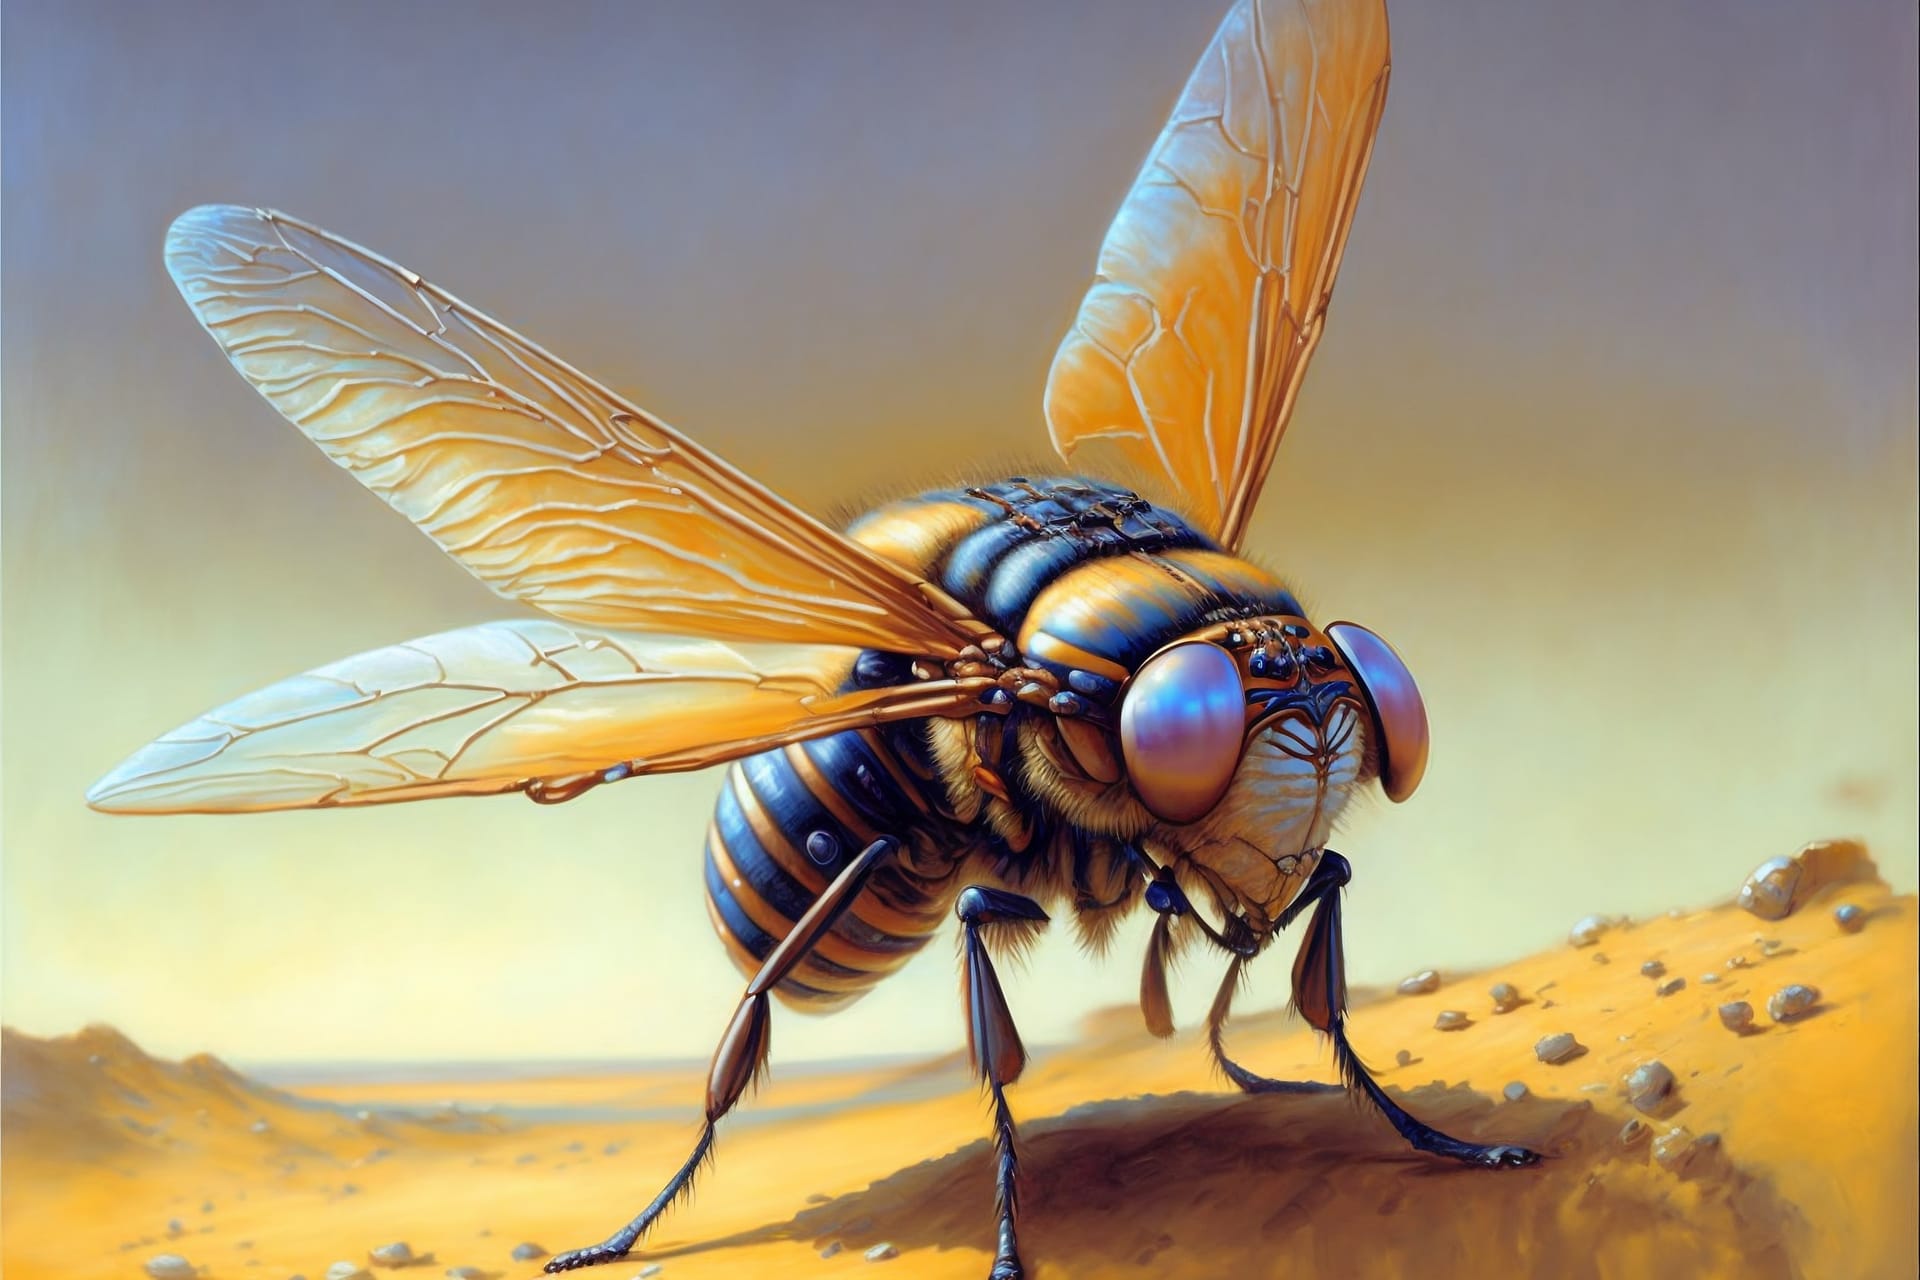 Futuristic fly creative digital painting 3d illustration image